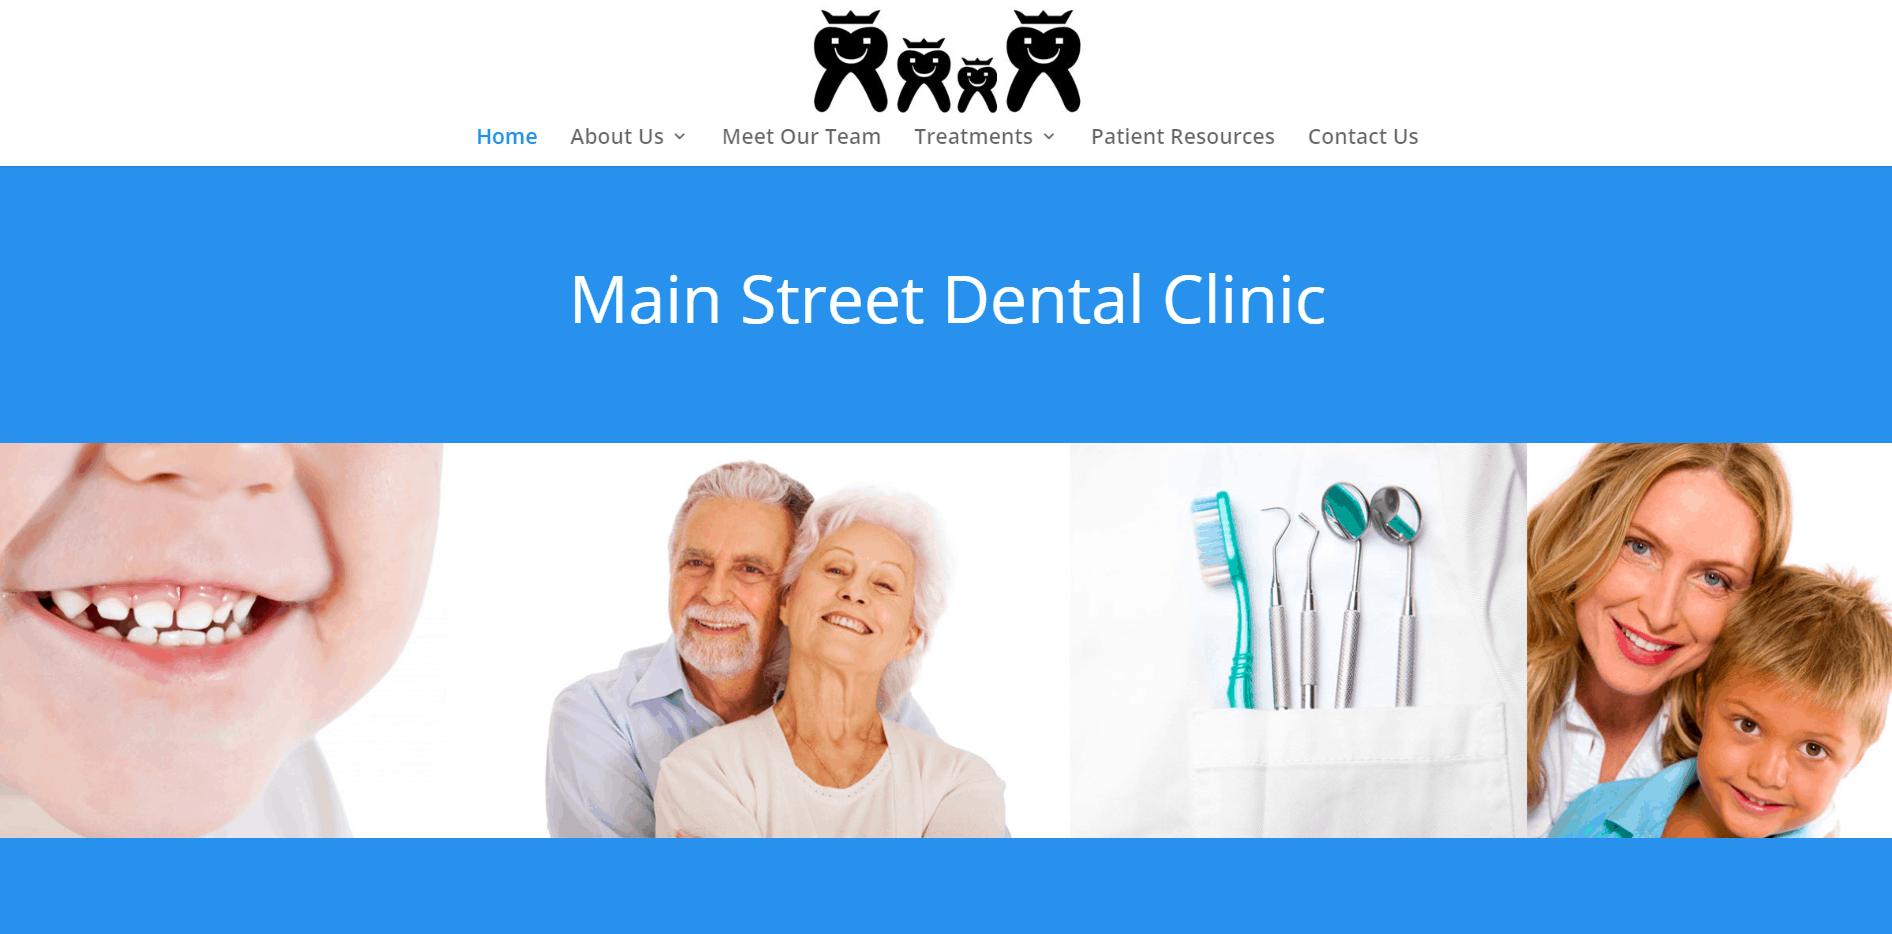 Main Street Dental Clinic